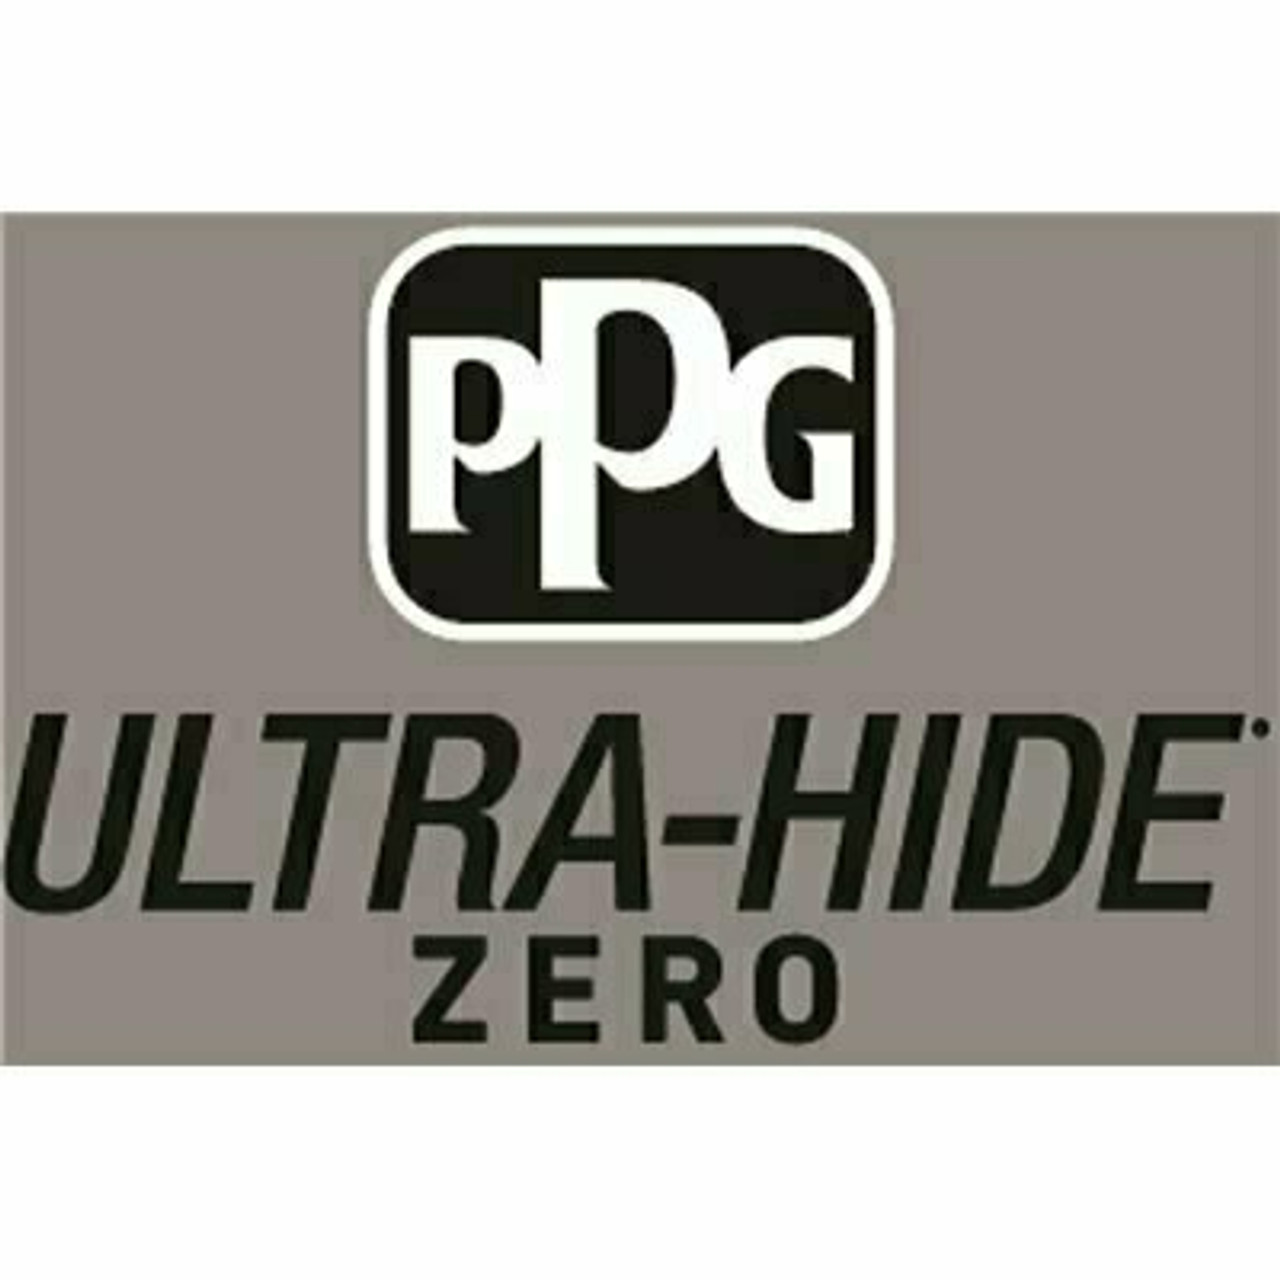 Ppg Ultra-Hide Zero 1 Gal. #Ppg1001-5 Dover Gray Semi-Gloss Interior Paint